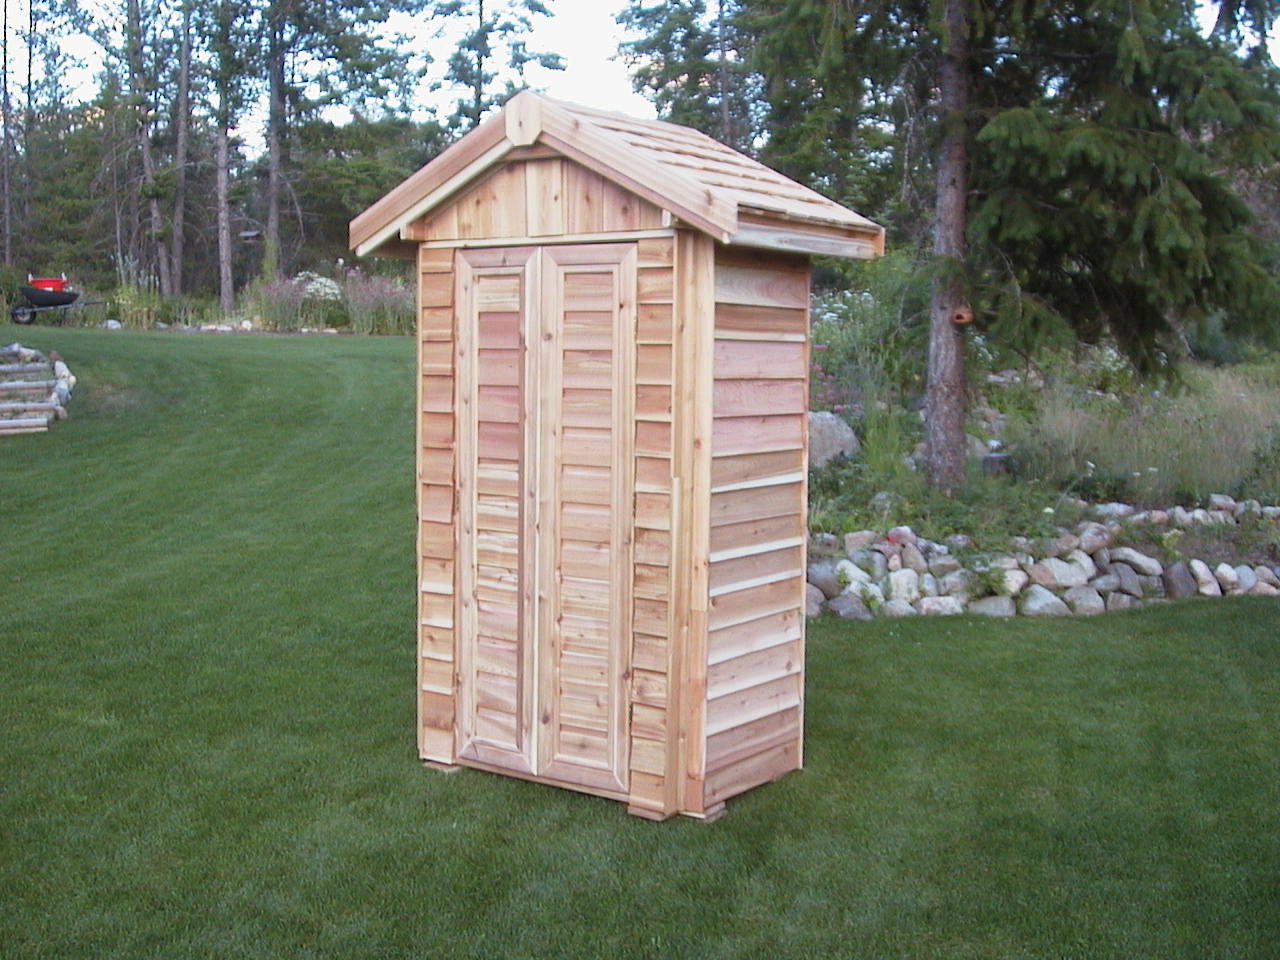  Garden storage shed using RB 1x6" Cedar siding 